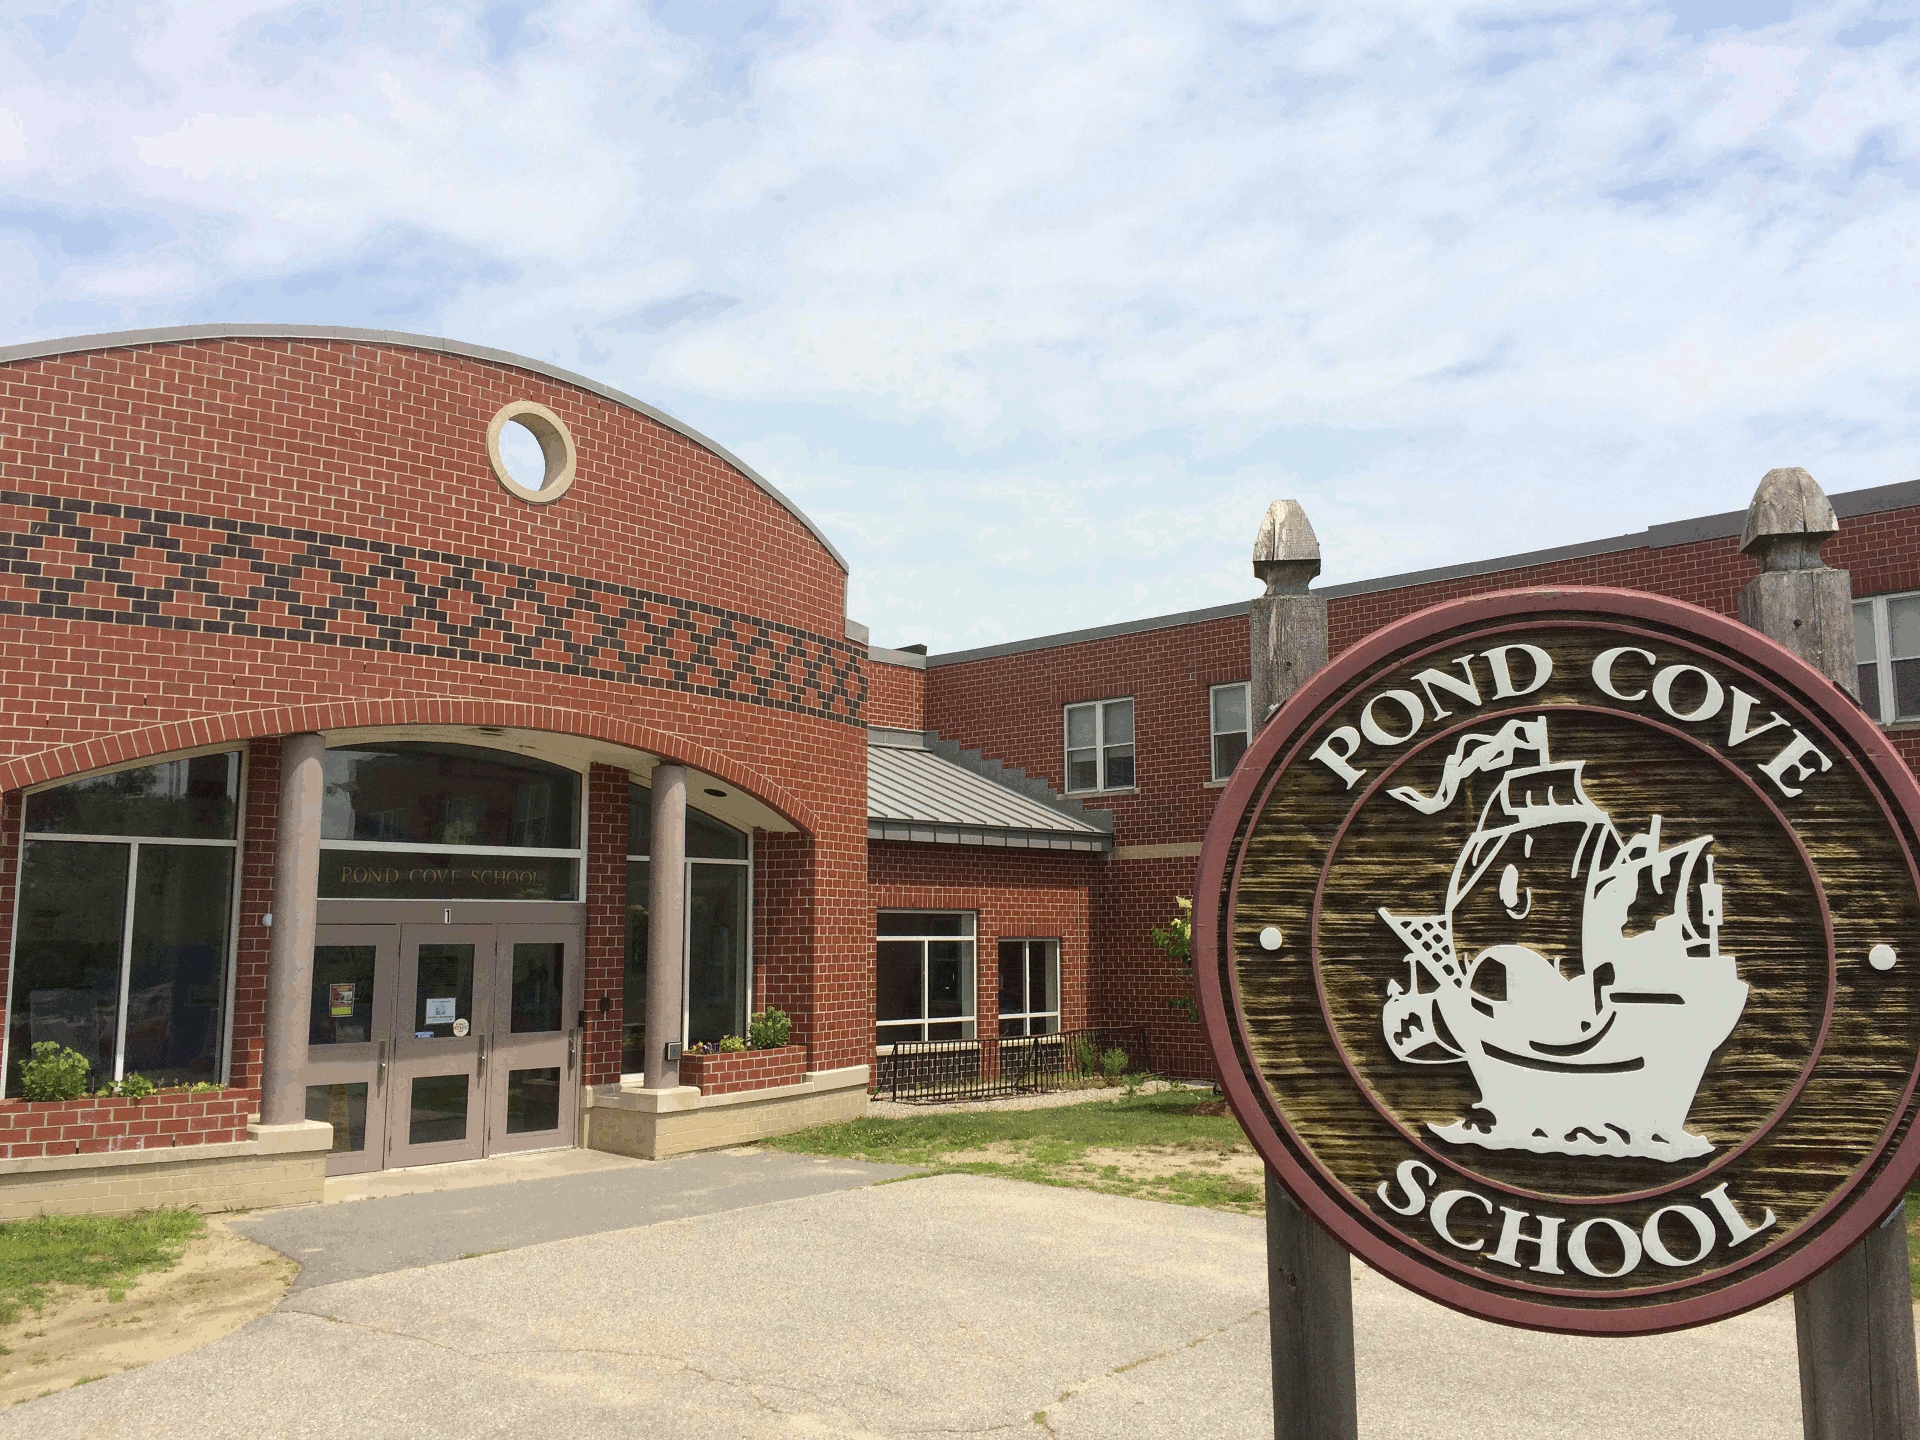 Pond Cove Elementary School